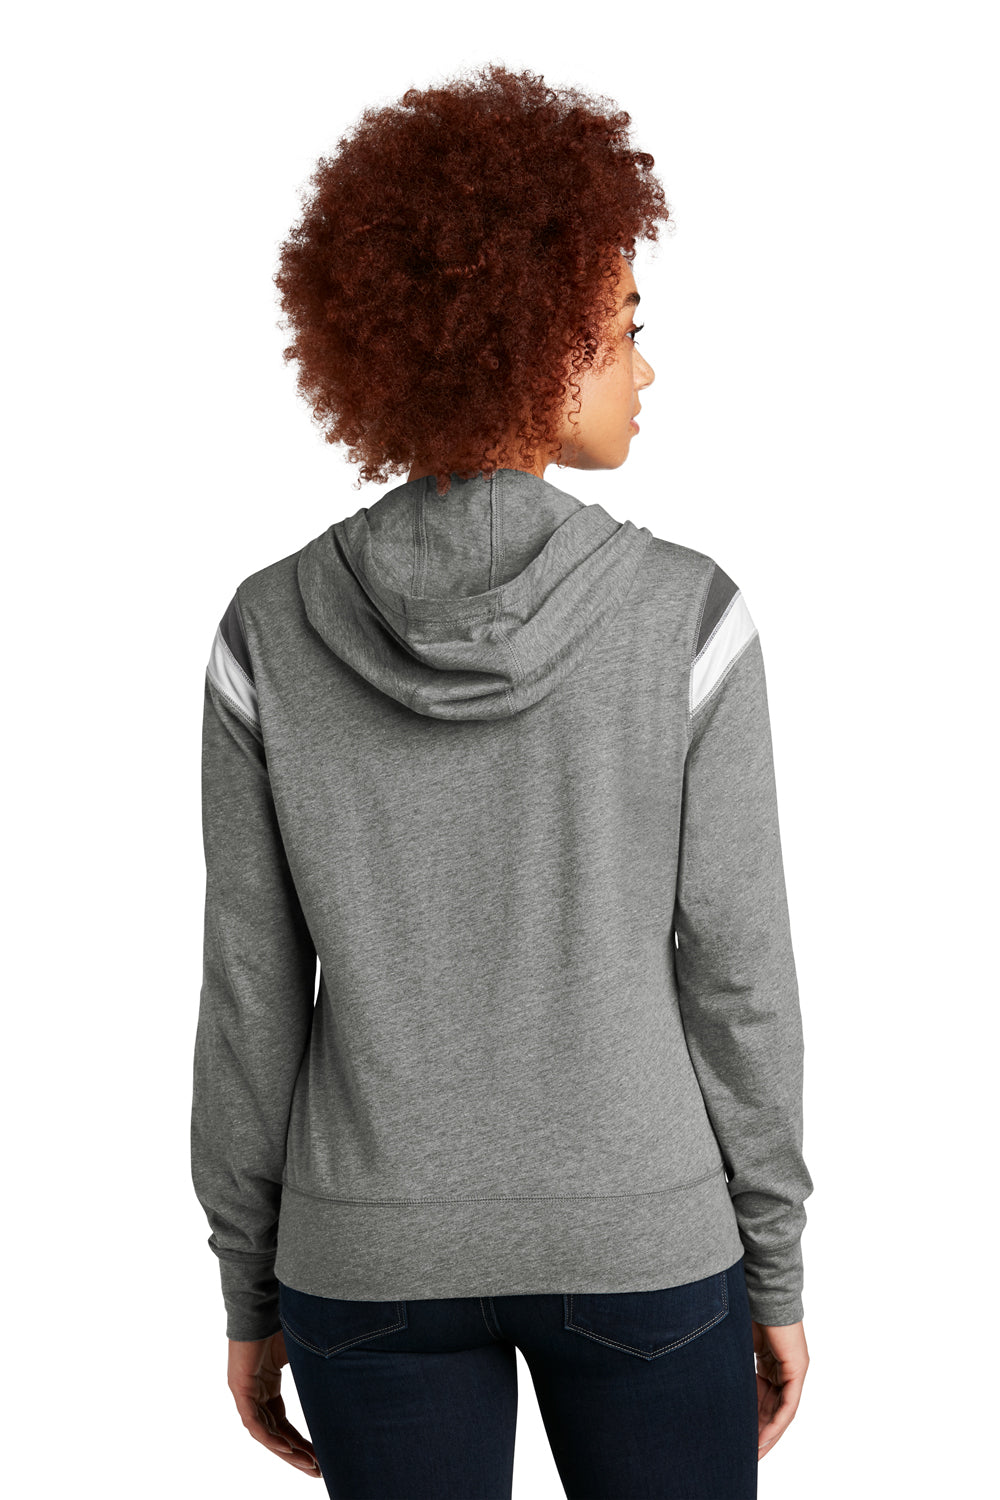 New Era Womens Heritage Varsity Hooded Sweatshirt Hoodie Heather Shadow Grey/Graphite Grey/White Side